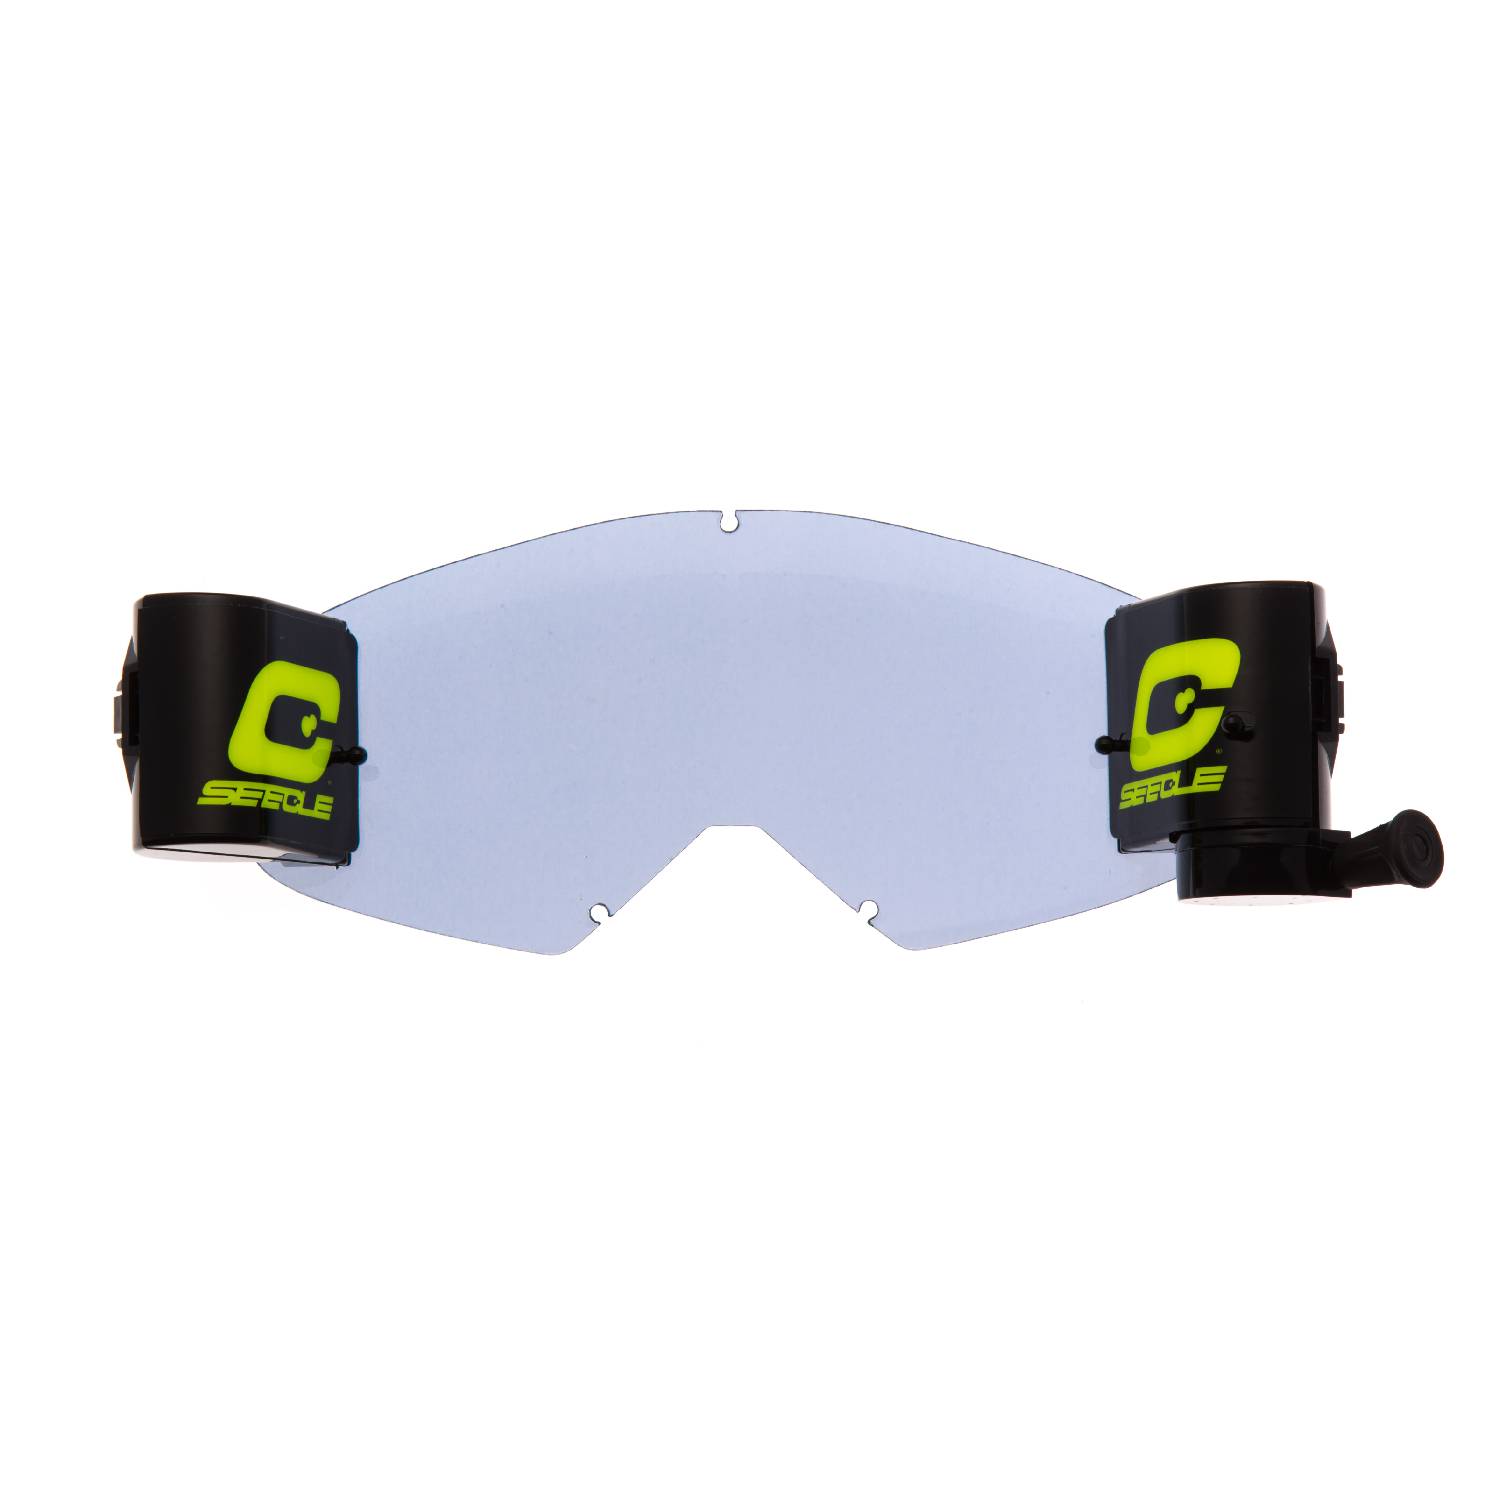 mud device kit smokey compatible for Oakley Mayhem goggle